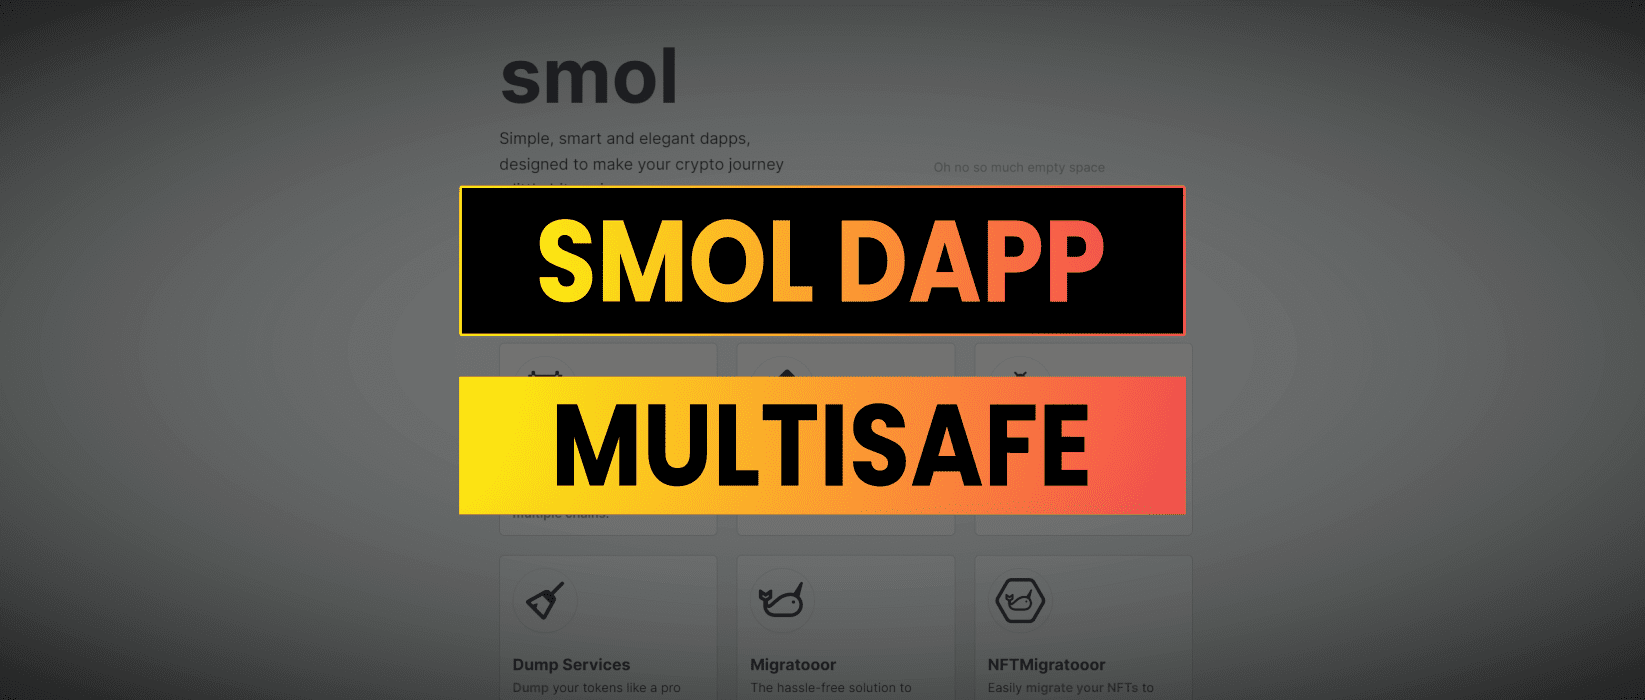 Smol dApp MultiSafe